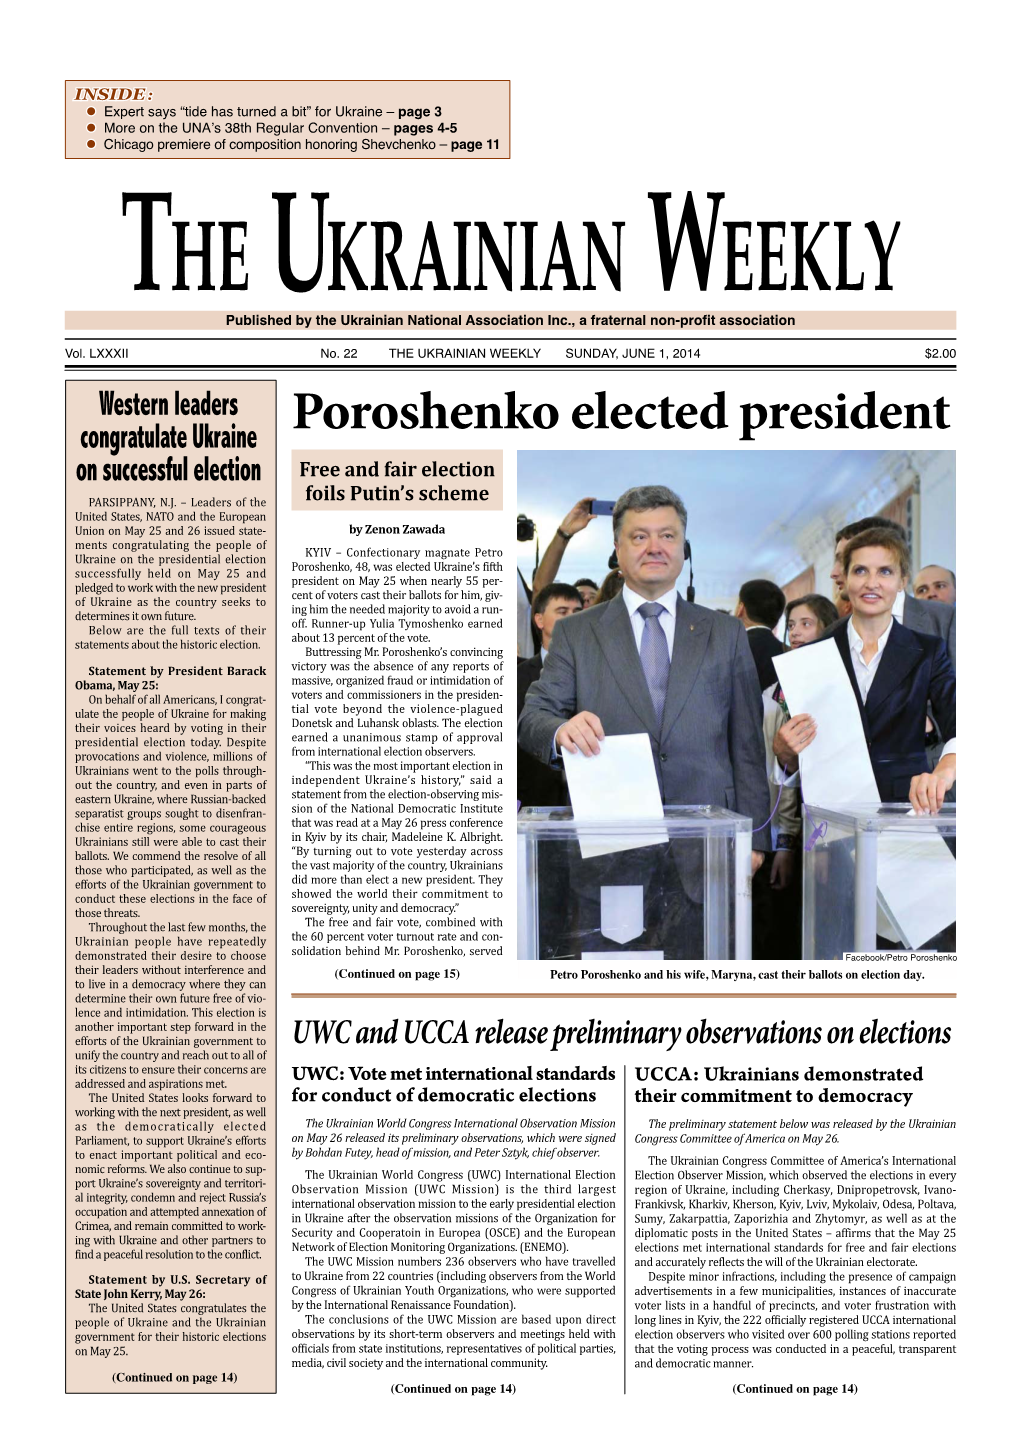 The Ukrainian Weekly 2014, No.22